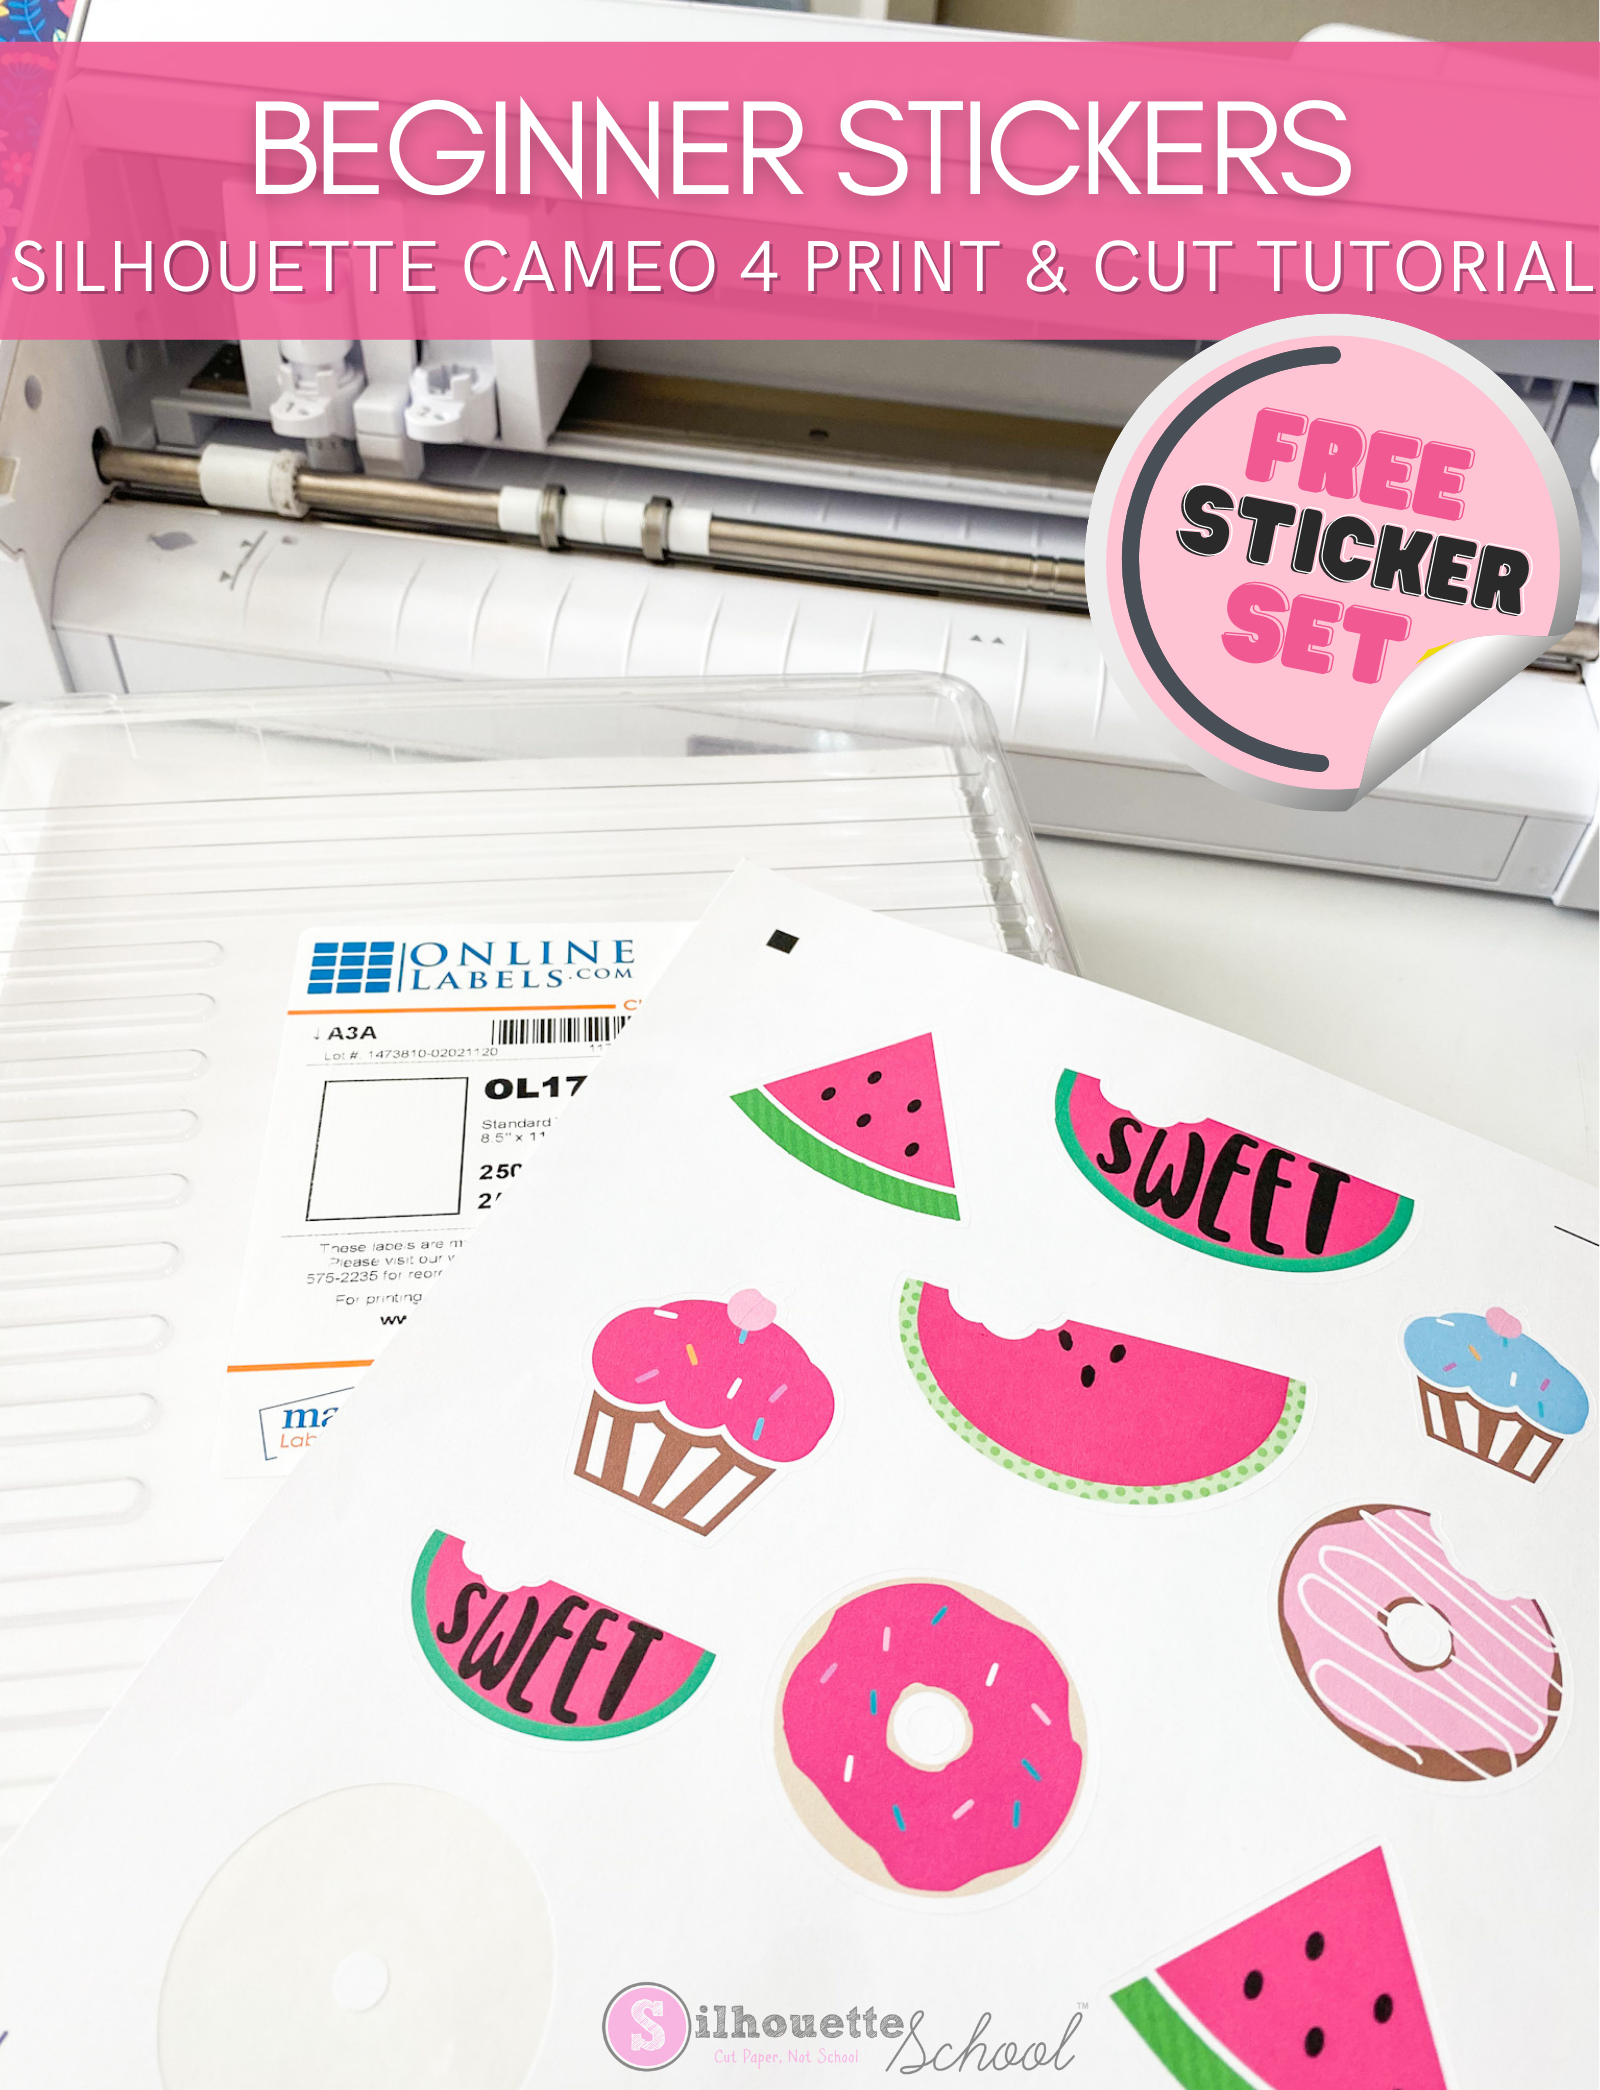 Print and Cut Silhouette CAMEO 4: Beginner Sticker Designs) - Silhouette School